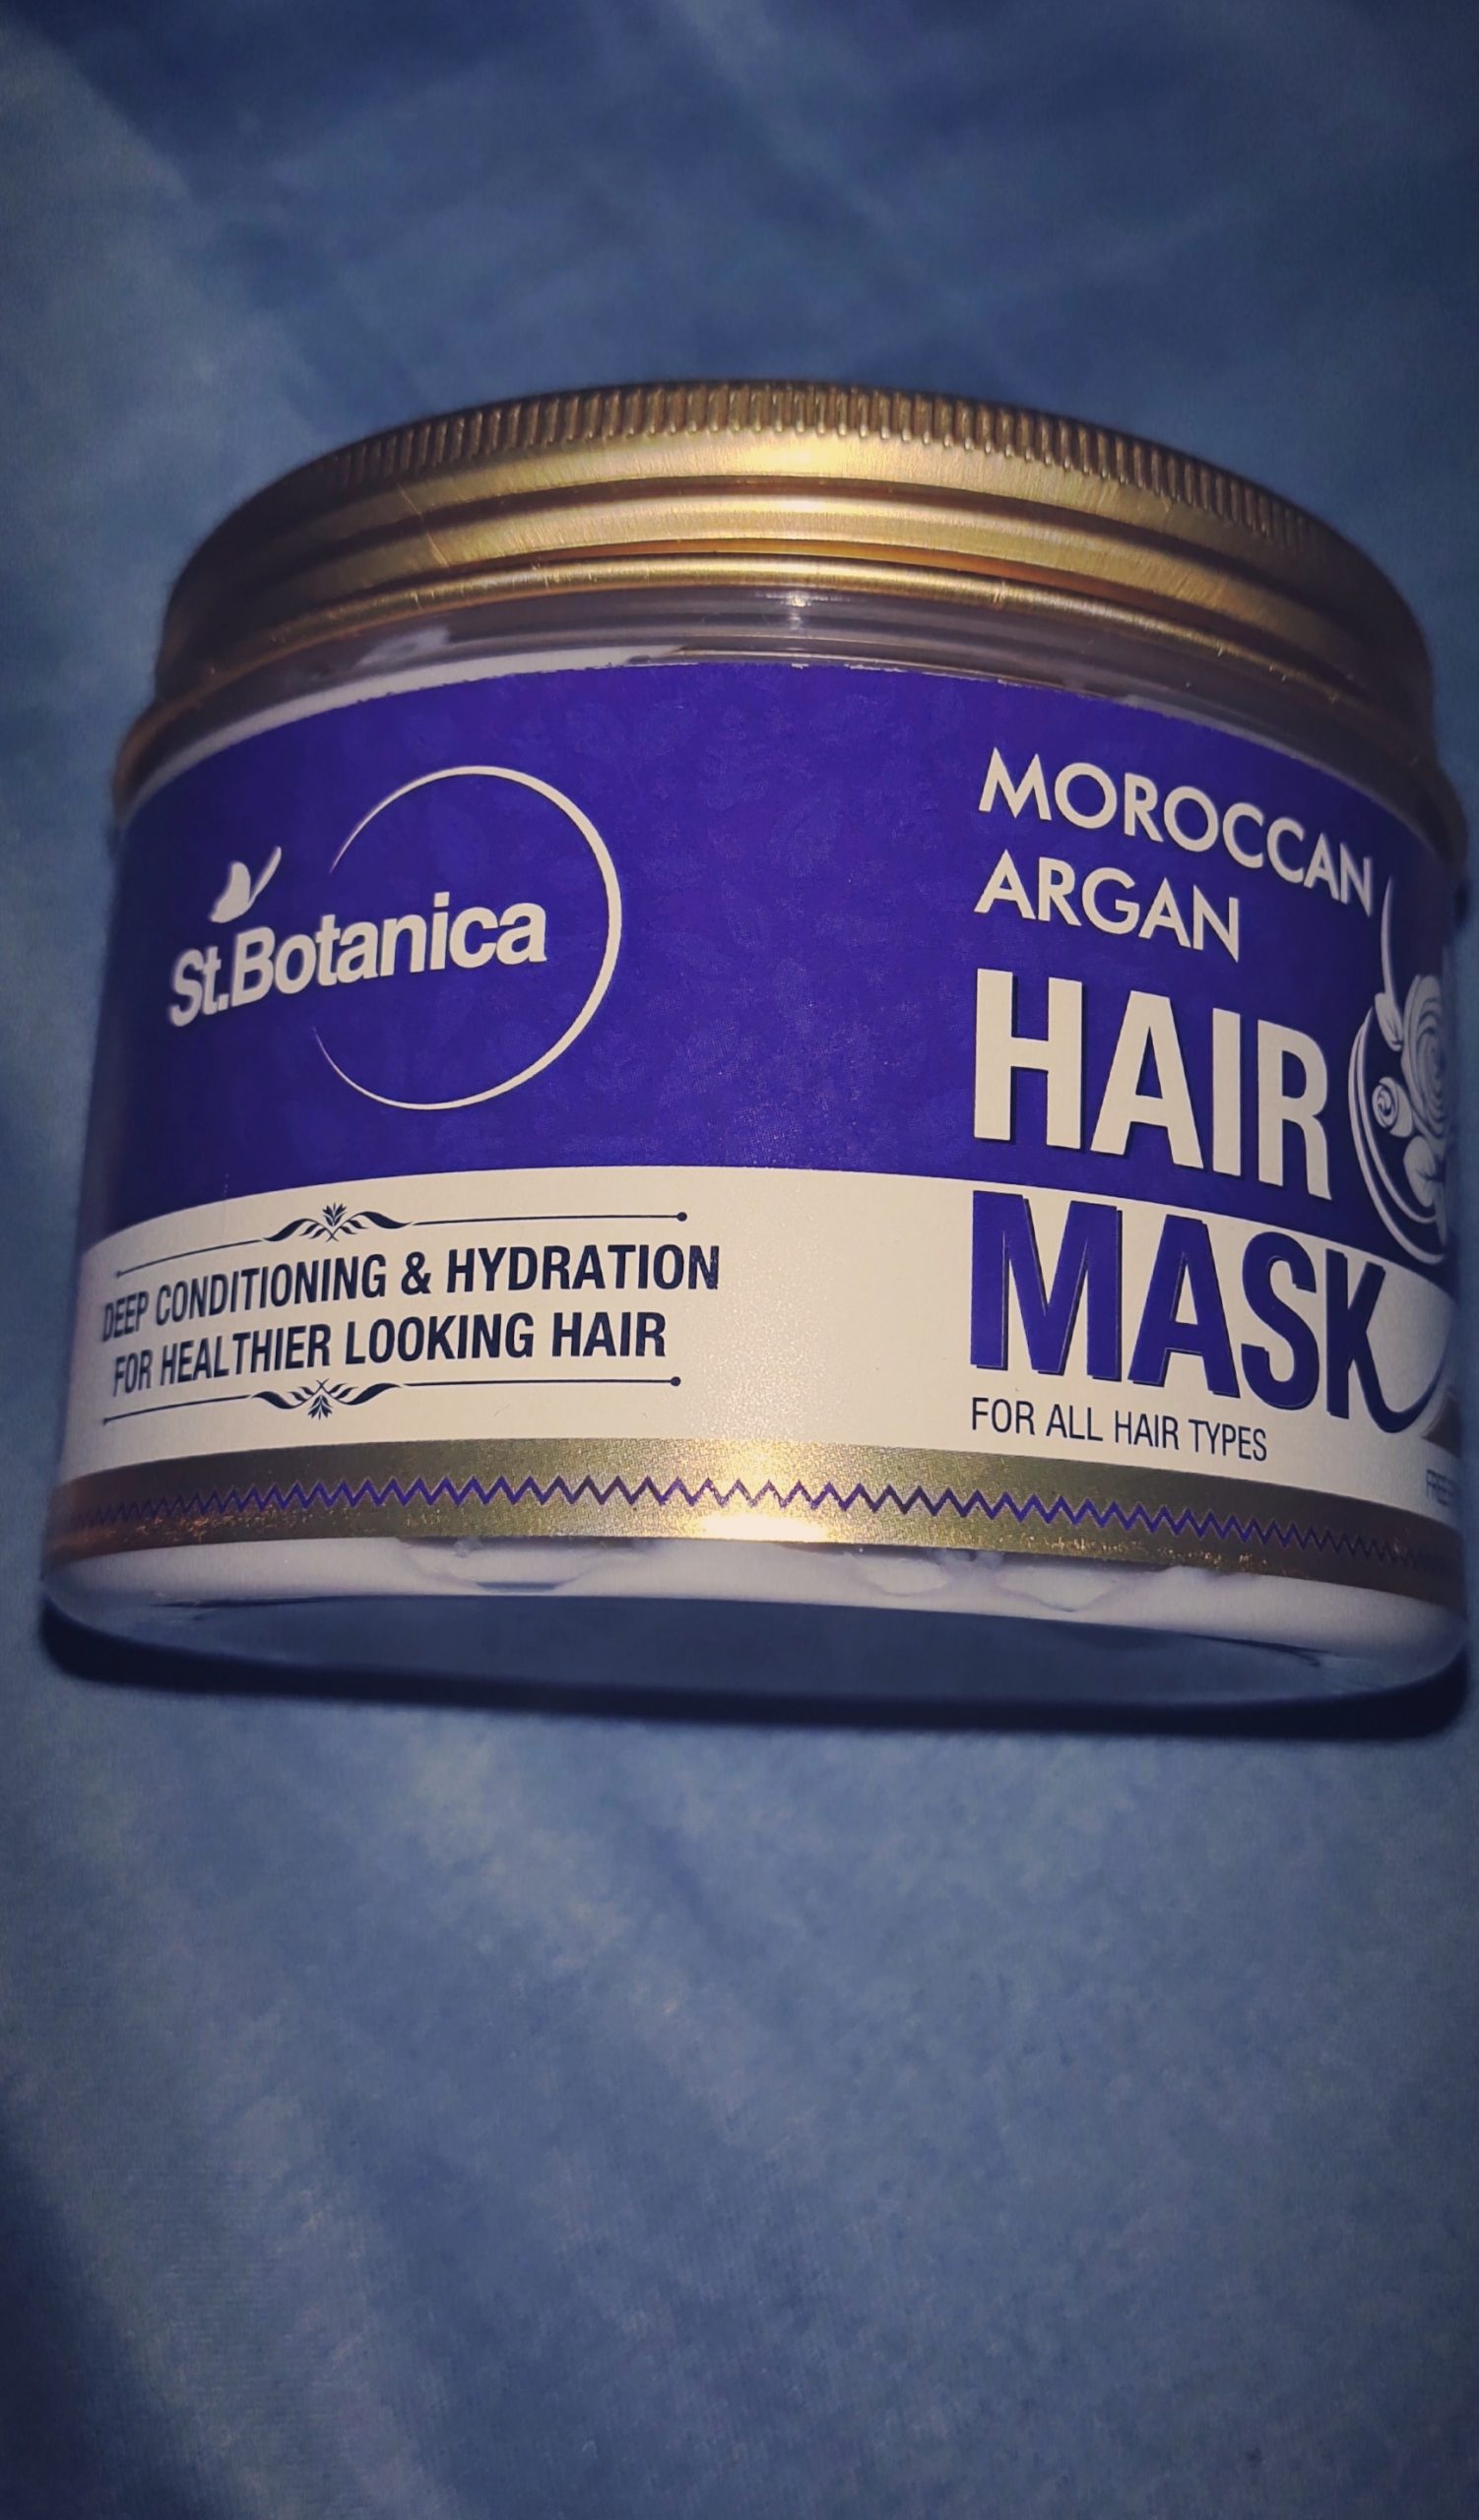 StBotanica Moroccan Argan Hair Mask Review | GirlXplorer